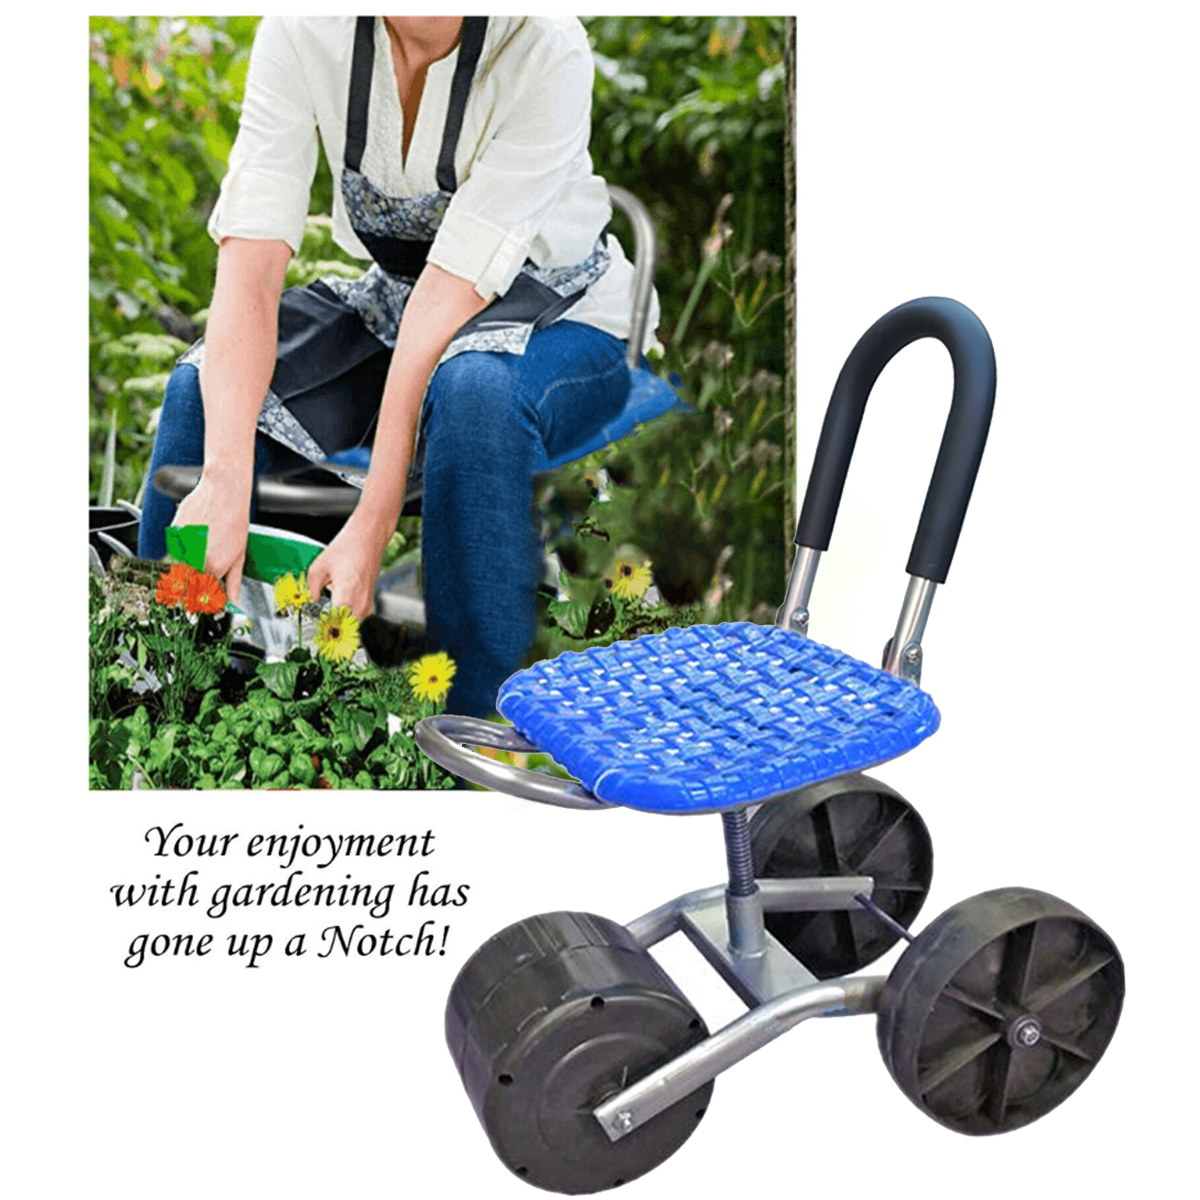 Oz Height Adjustable 360Â° Rotating Gardening Seat